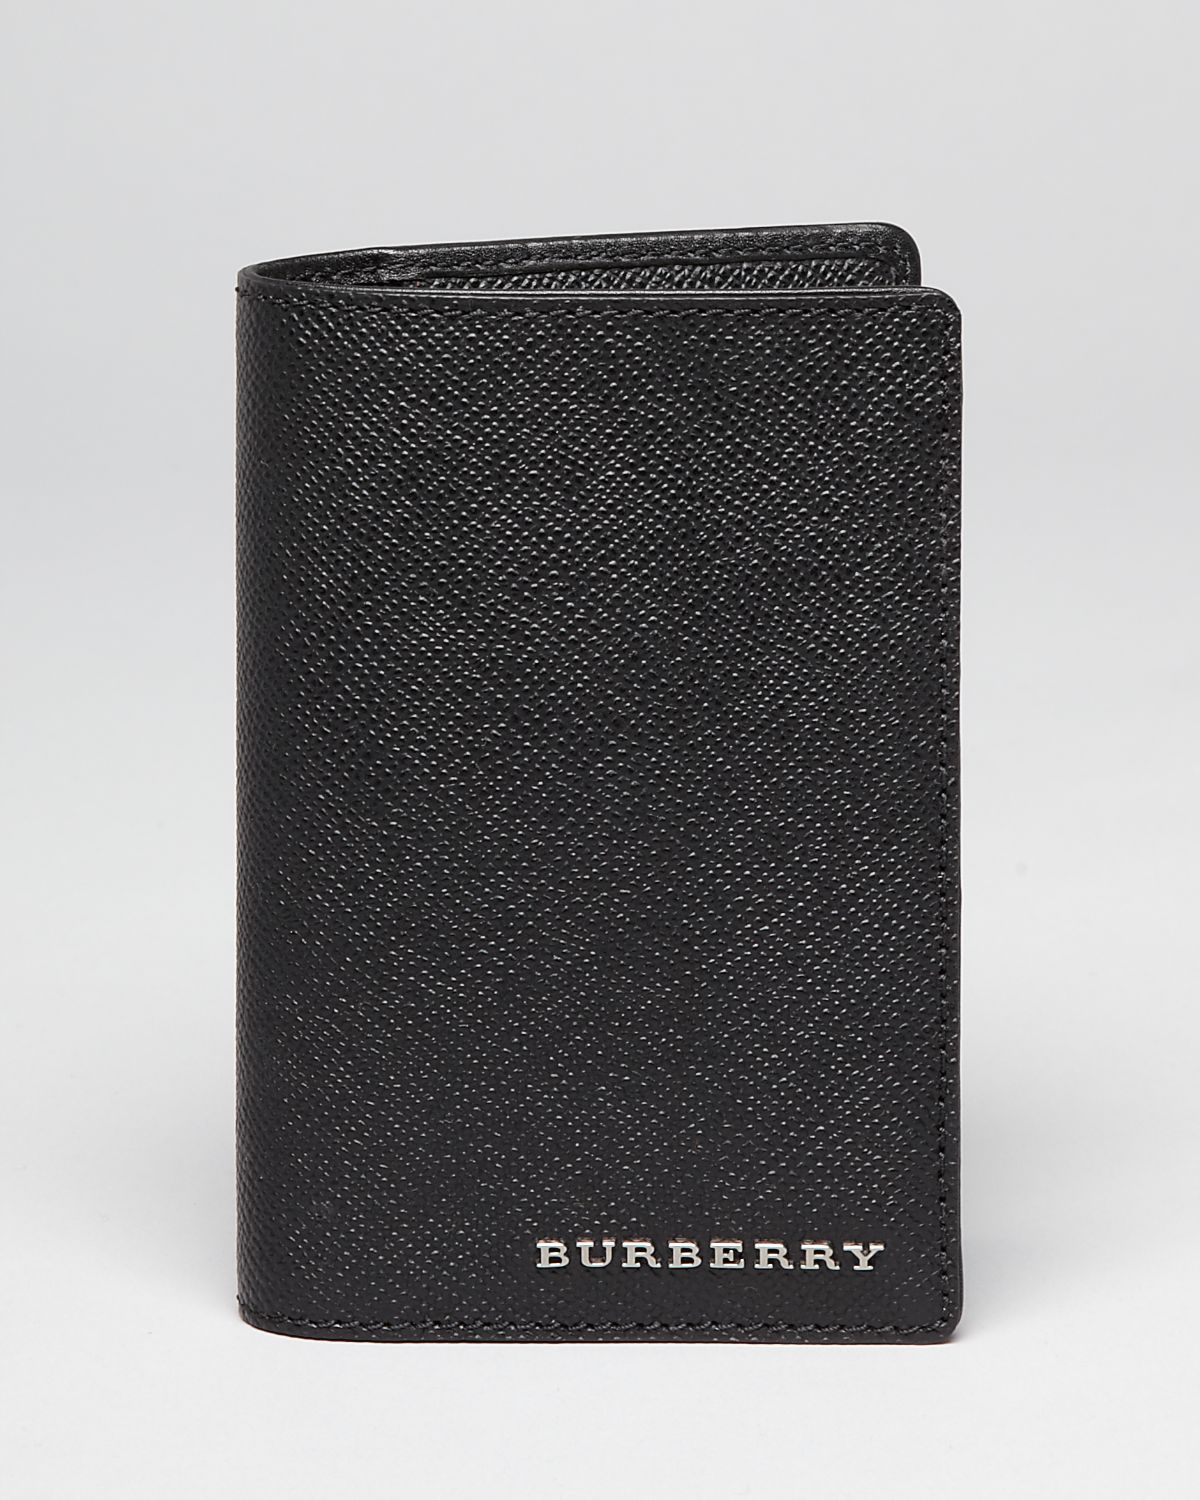 burberry passport case